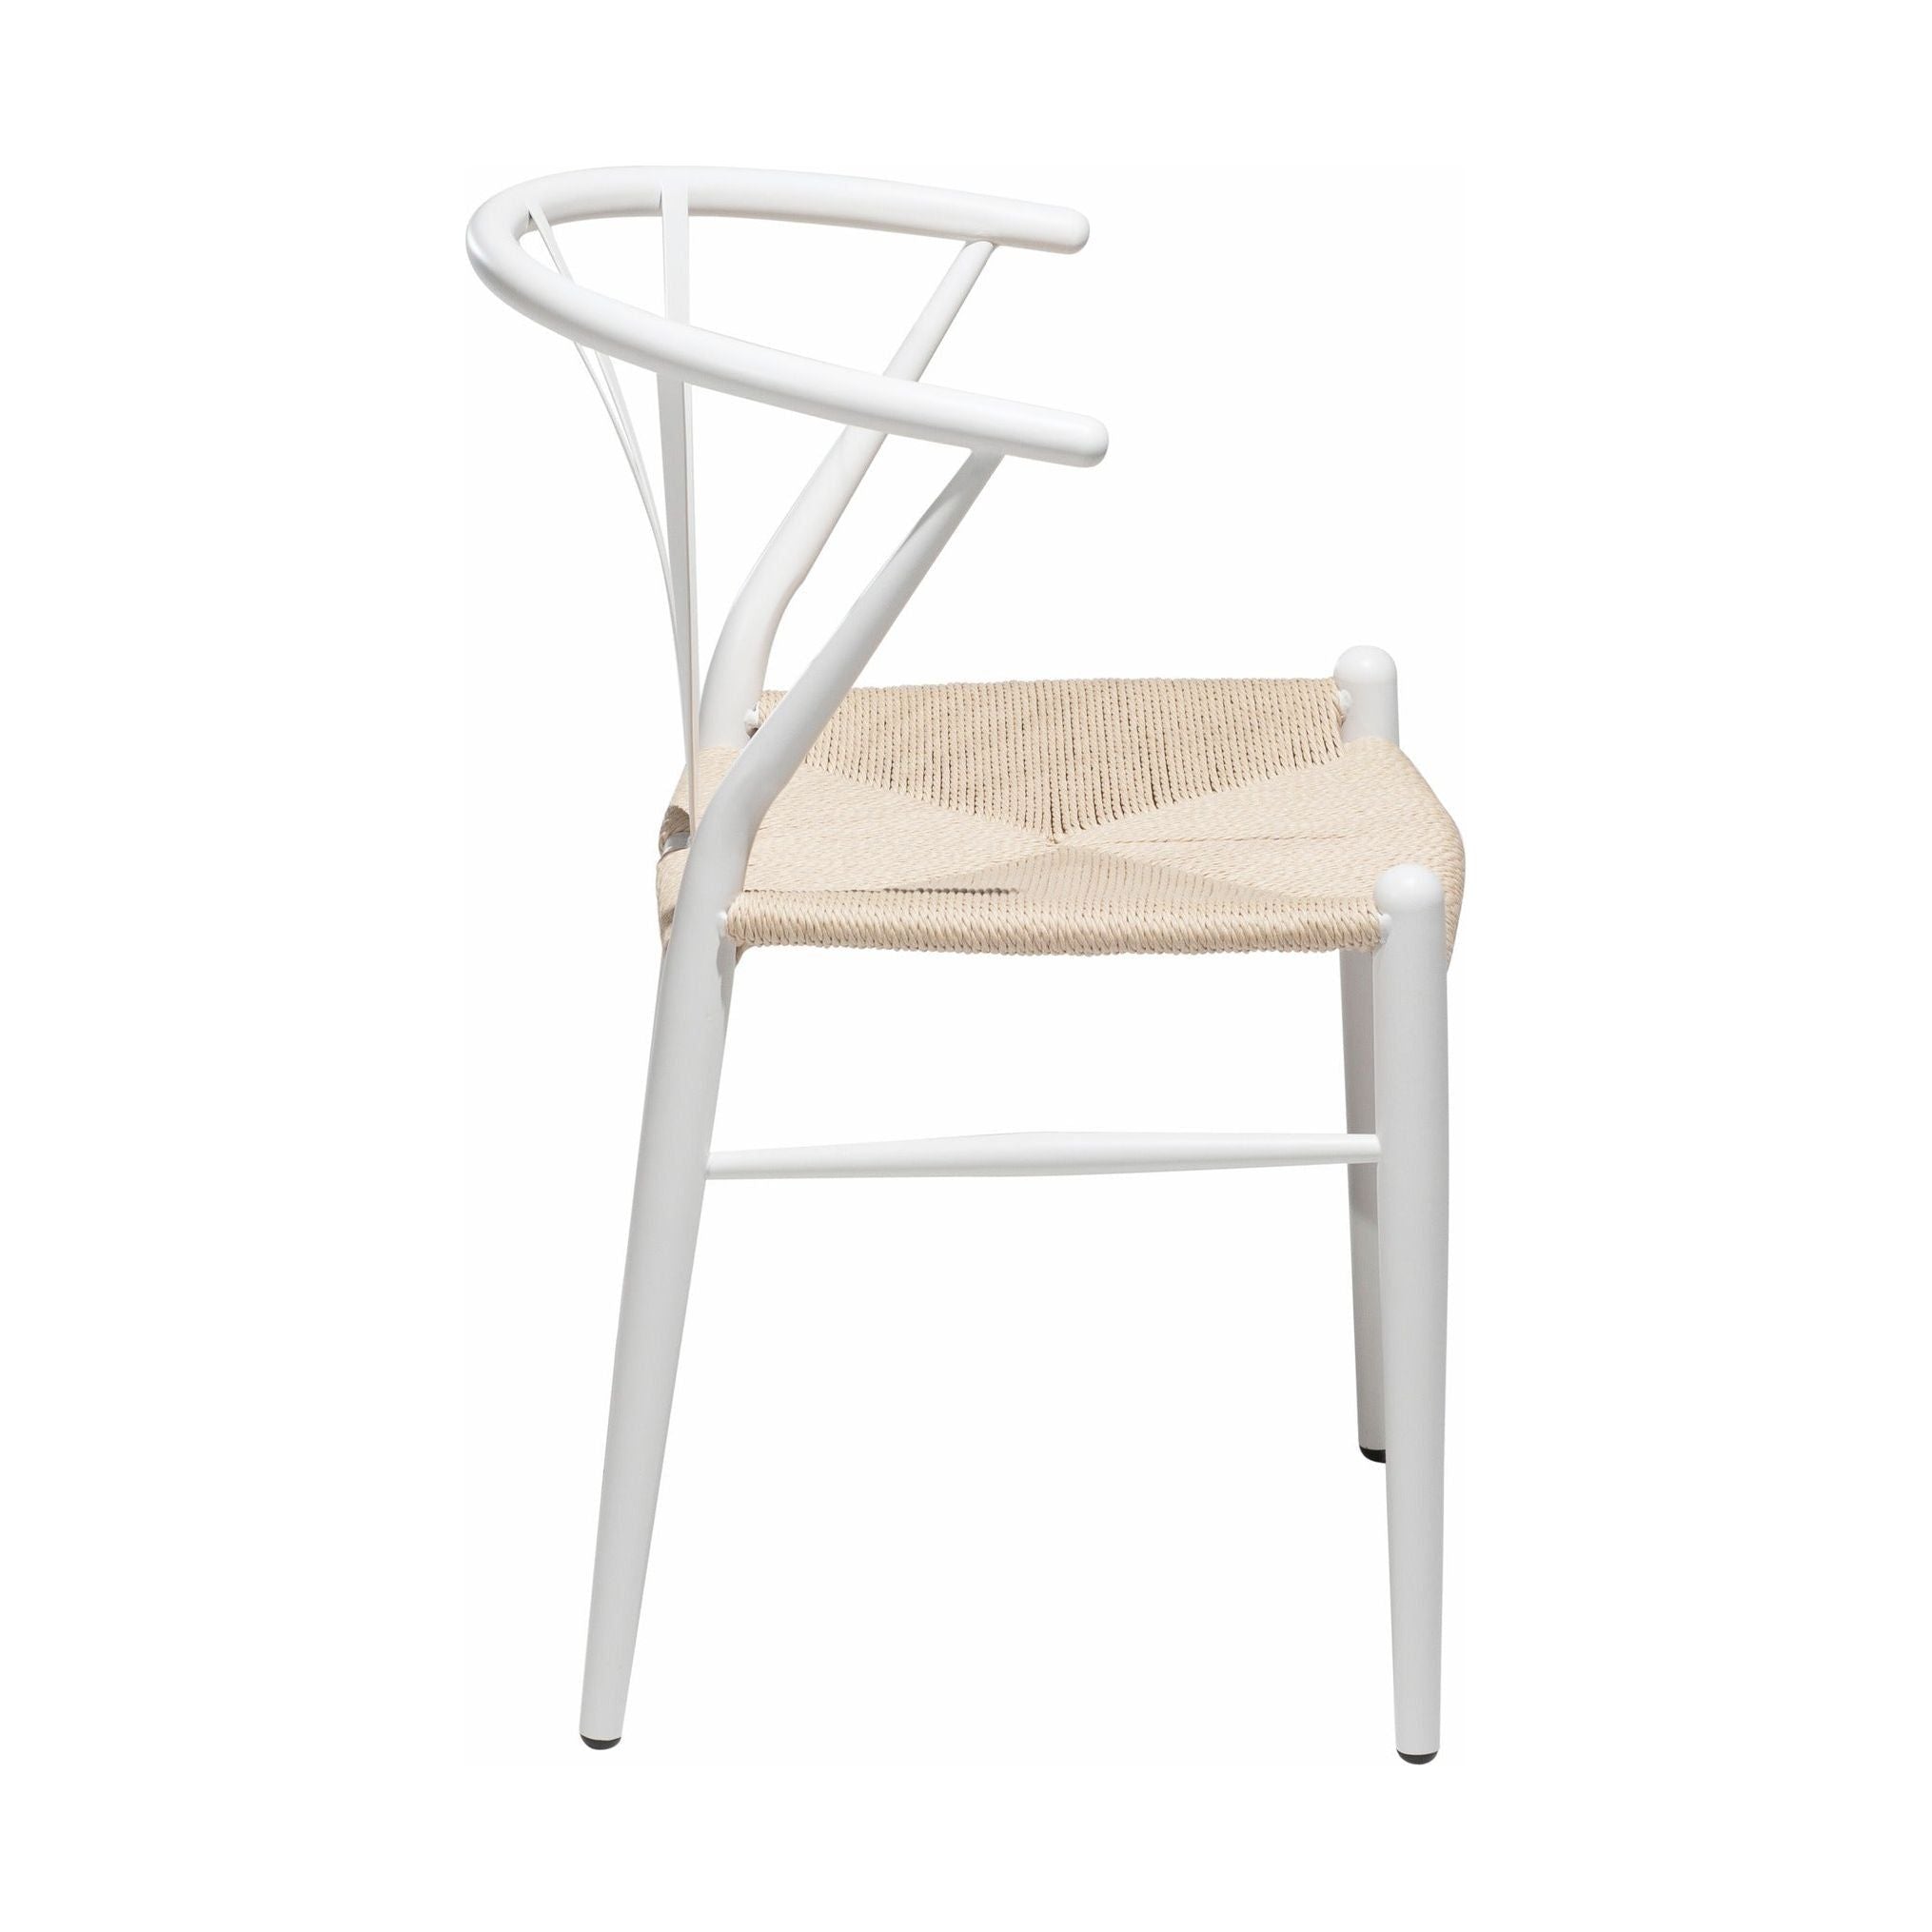 DELTA kėdė, balta spalva